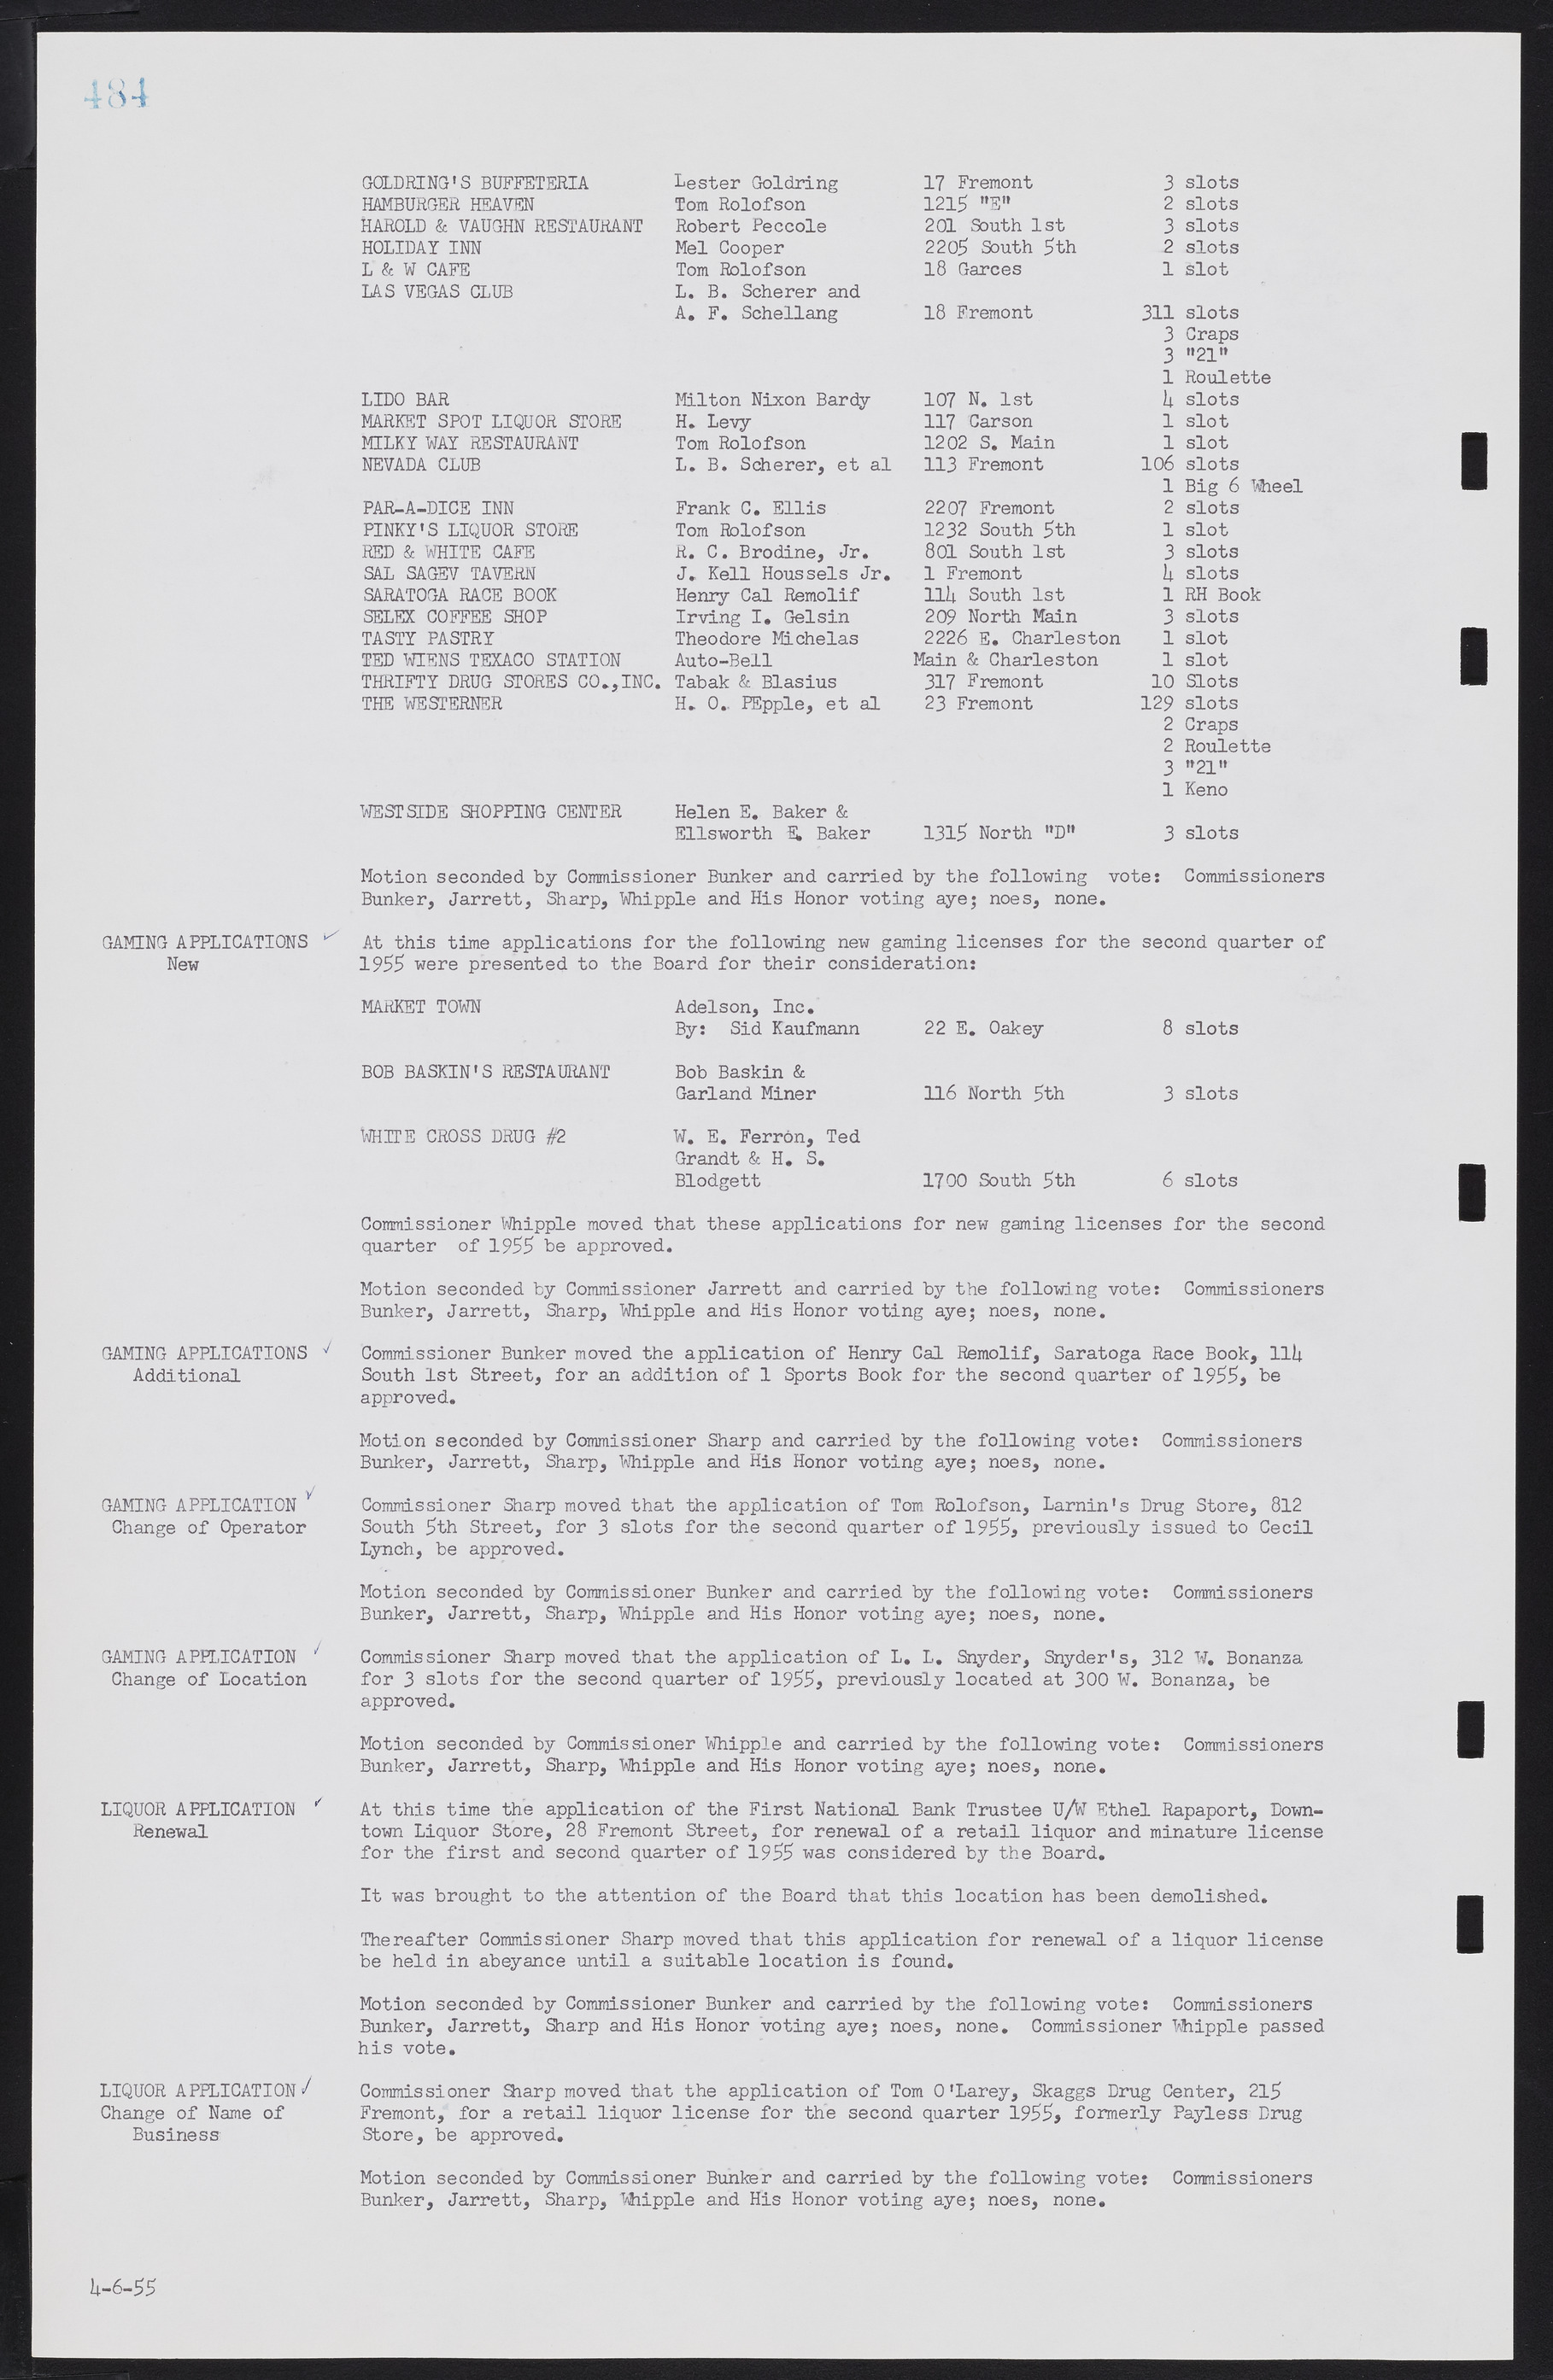 Las Vegas City Commission Minutes, February 17, 1954 to September 21, 1955, lvc000009-490